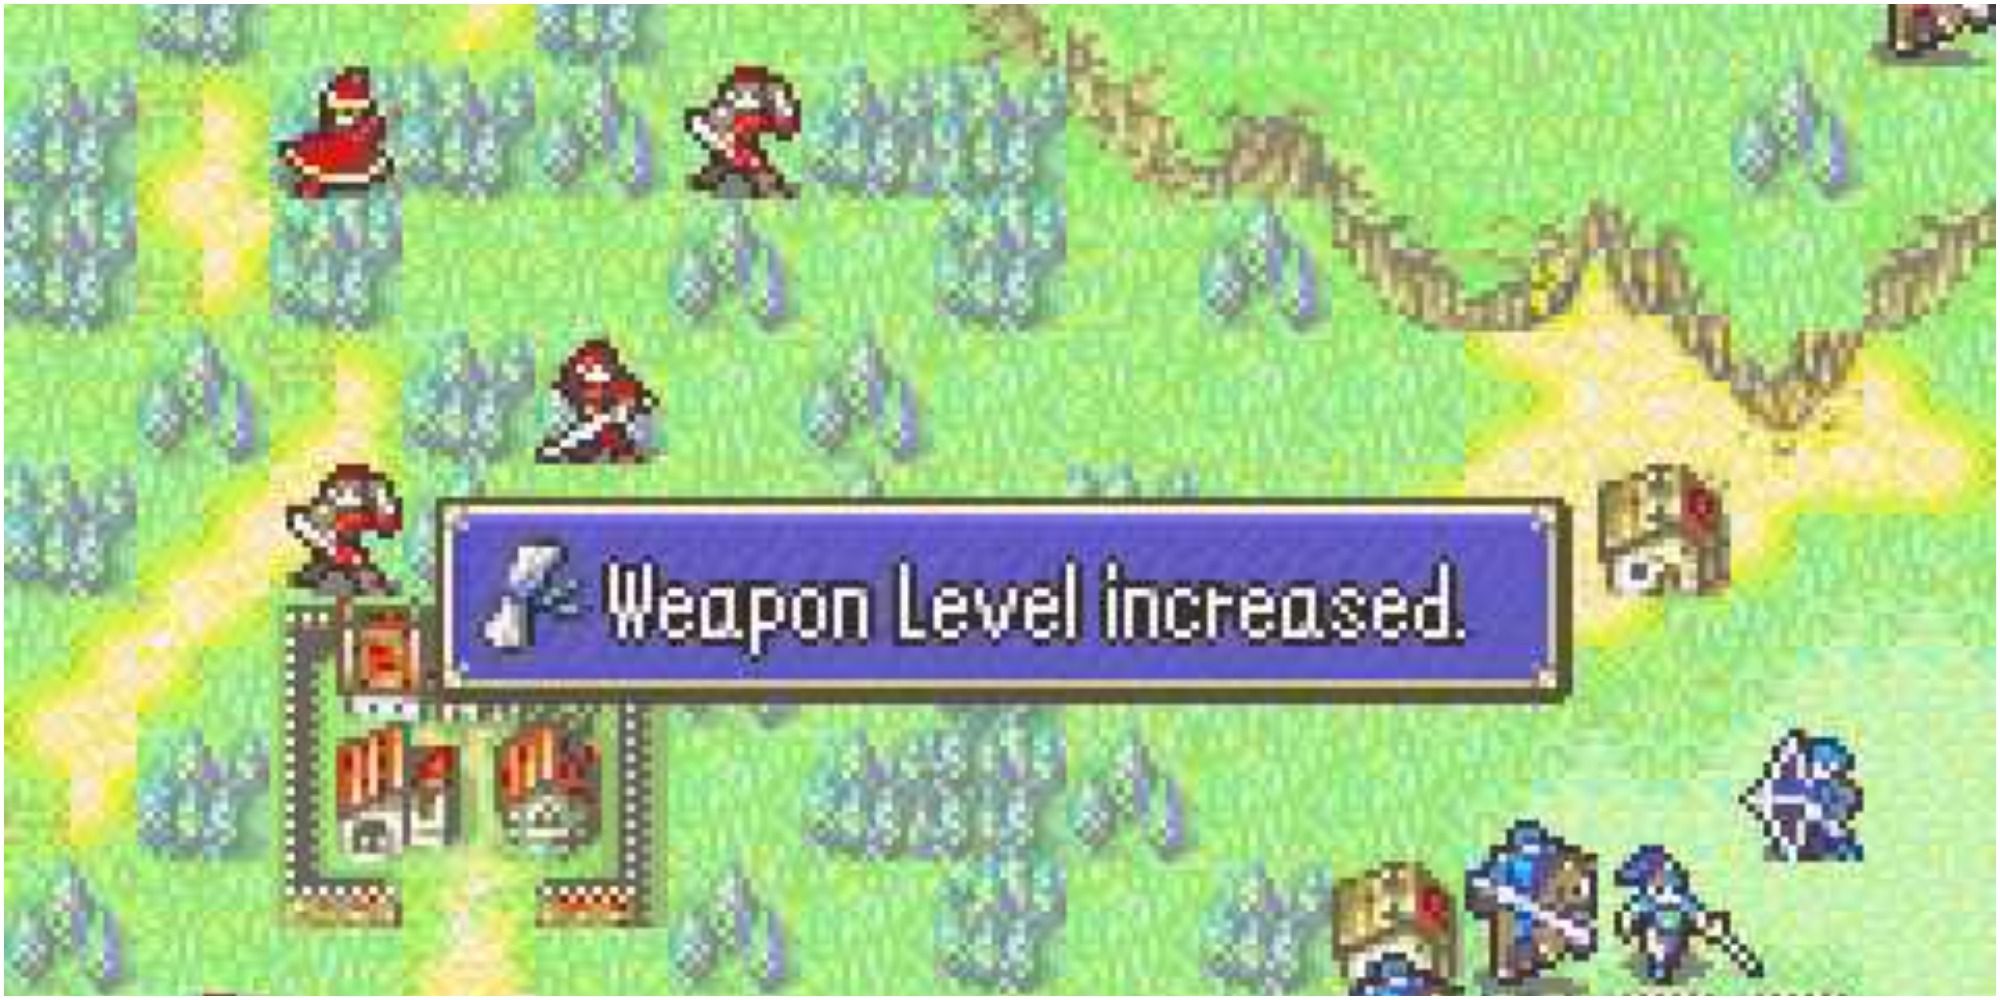 arms scroll fire emblem screenshot with forest terrain